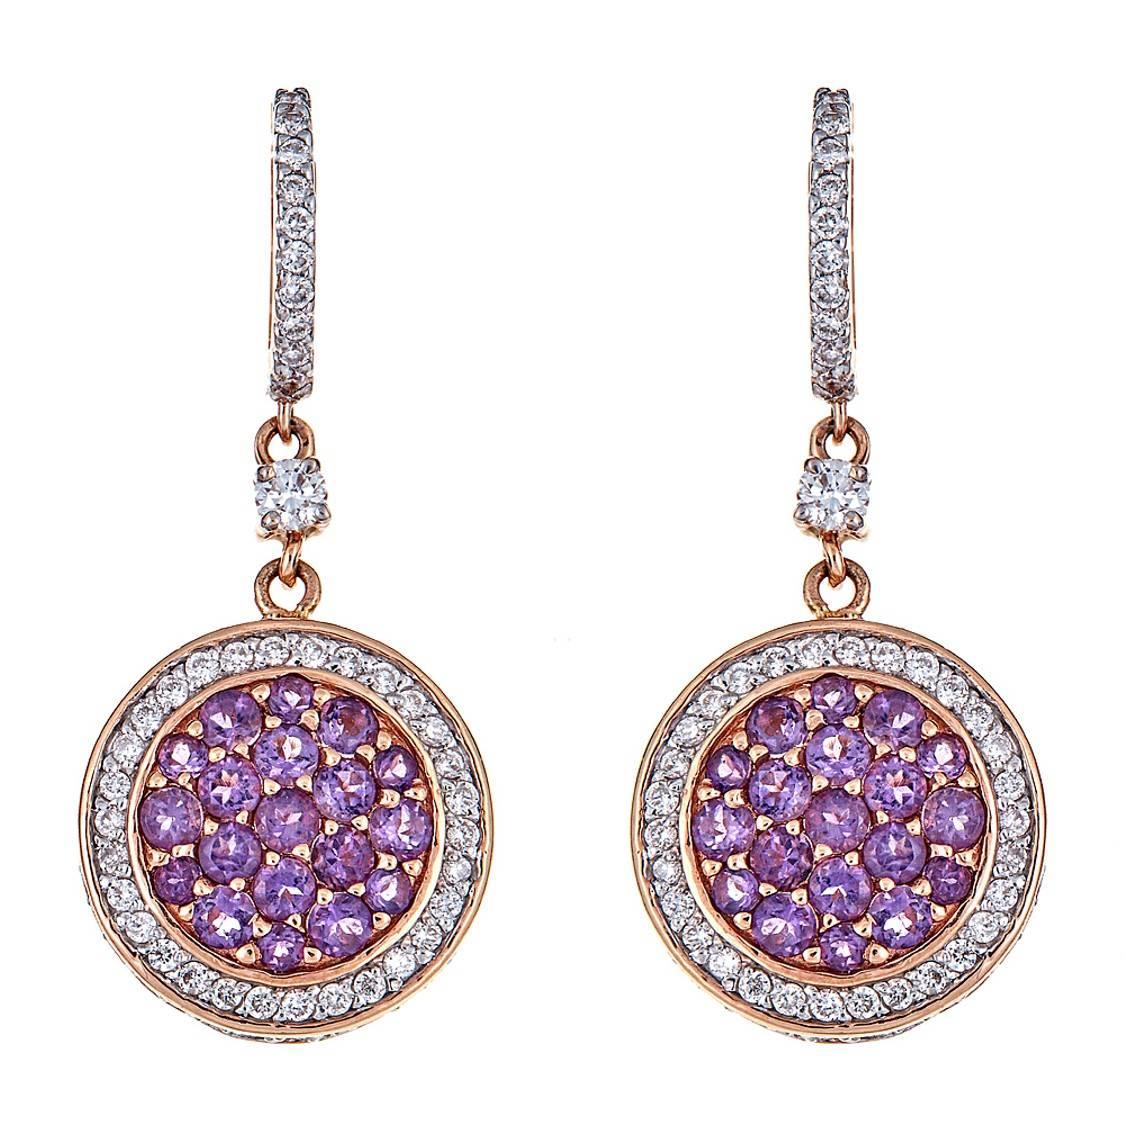 1.14 Carat Amethyst and 1.03 Carat Diamond Drop Earrings in 18 Karat Pink Gold For Sale